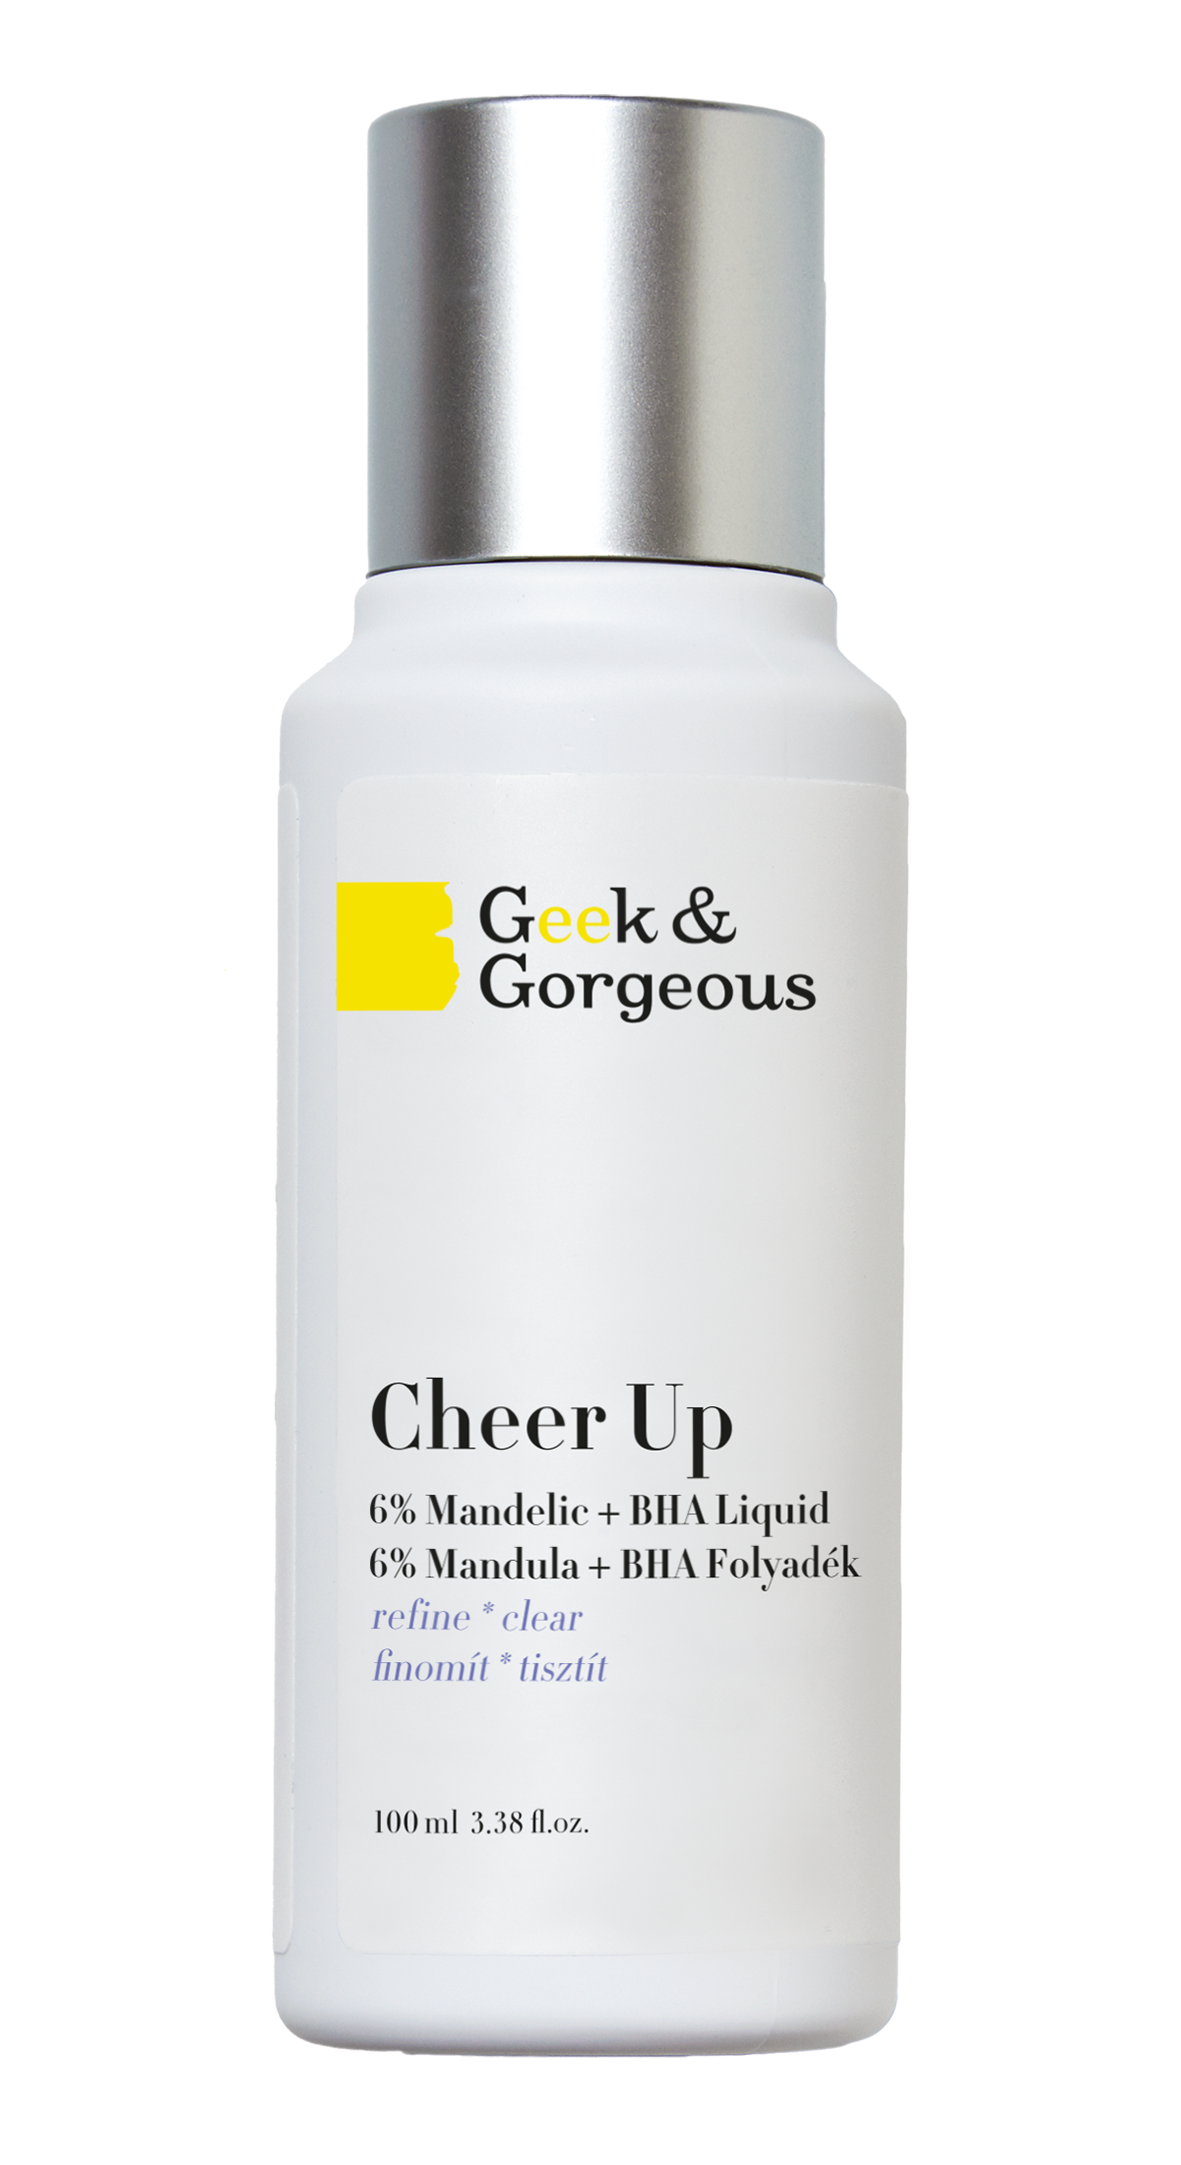 Geek & Gorgeous Cheer Up 6% Mandelic + BHA Liquid